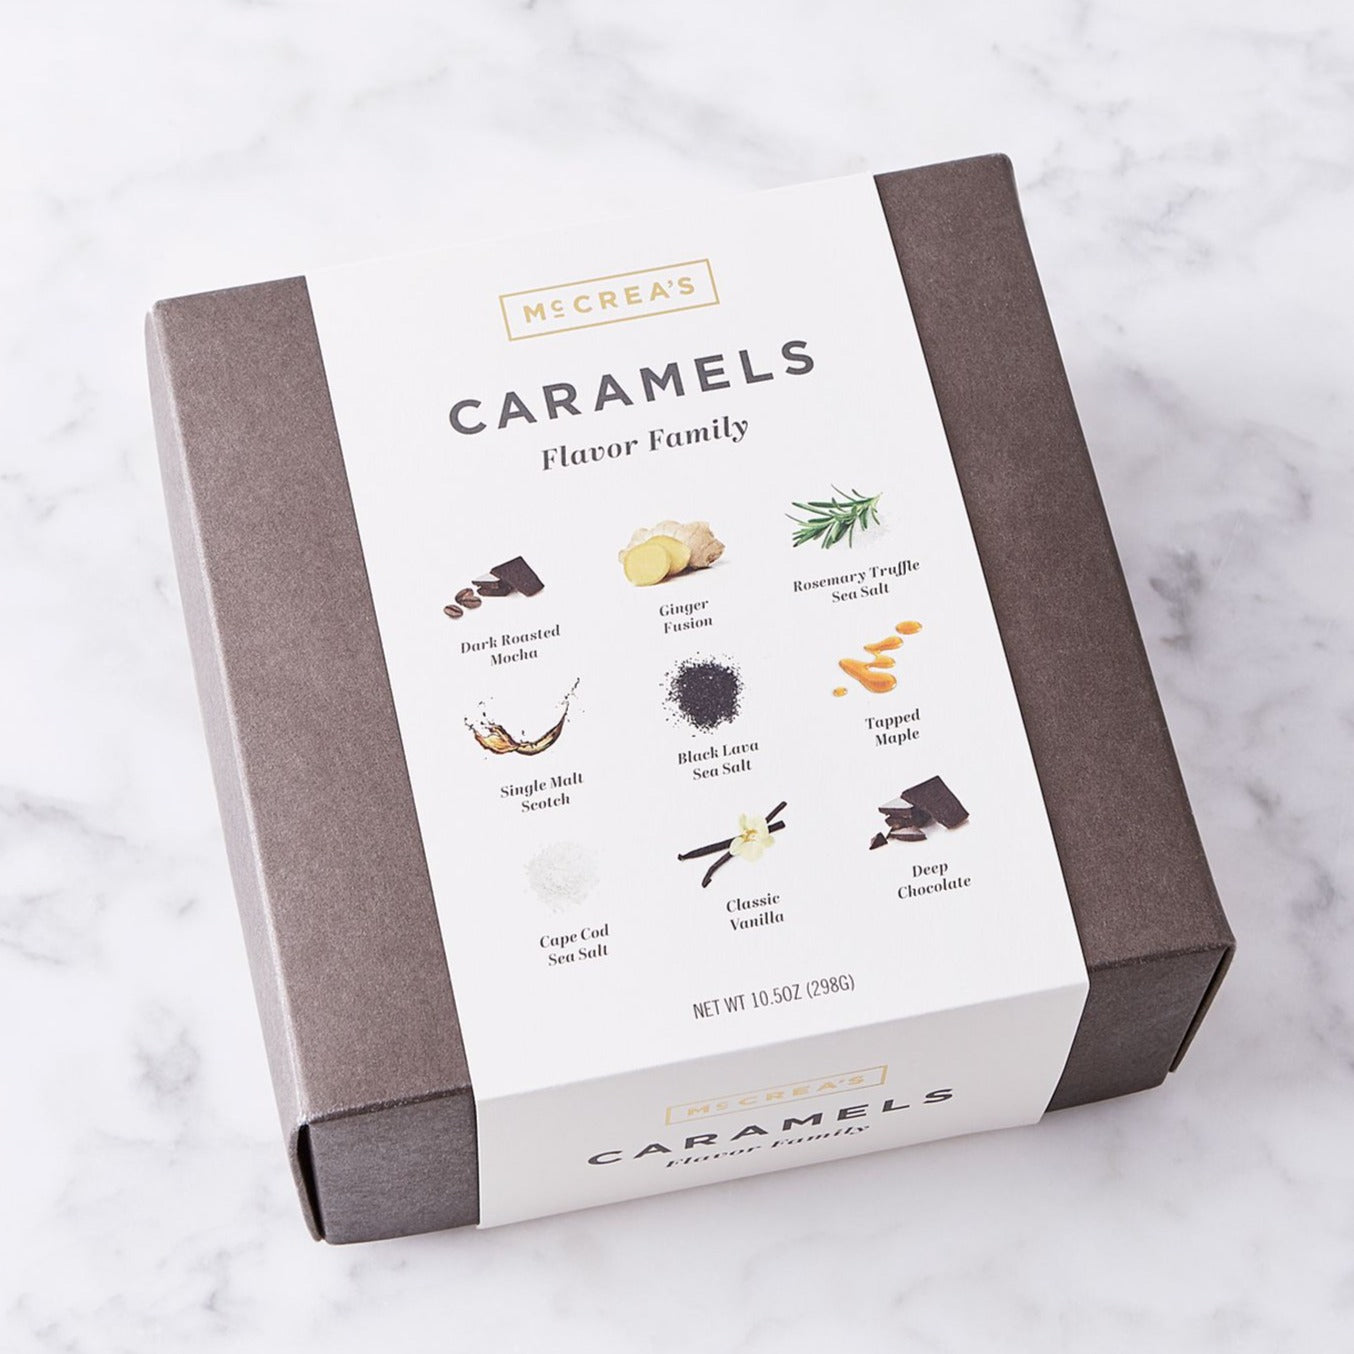 Flavor Family Box of McCrea's Caramels